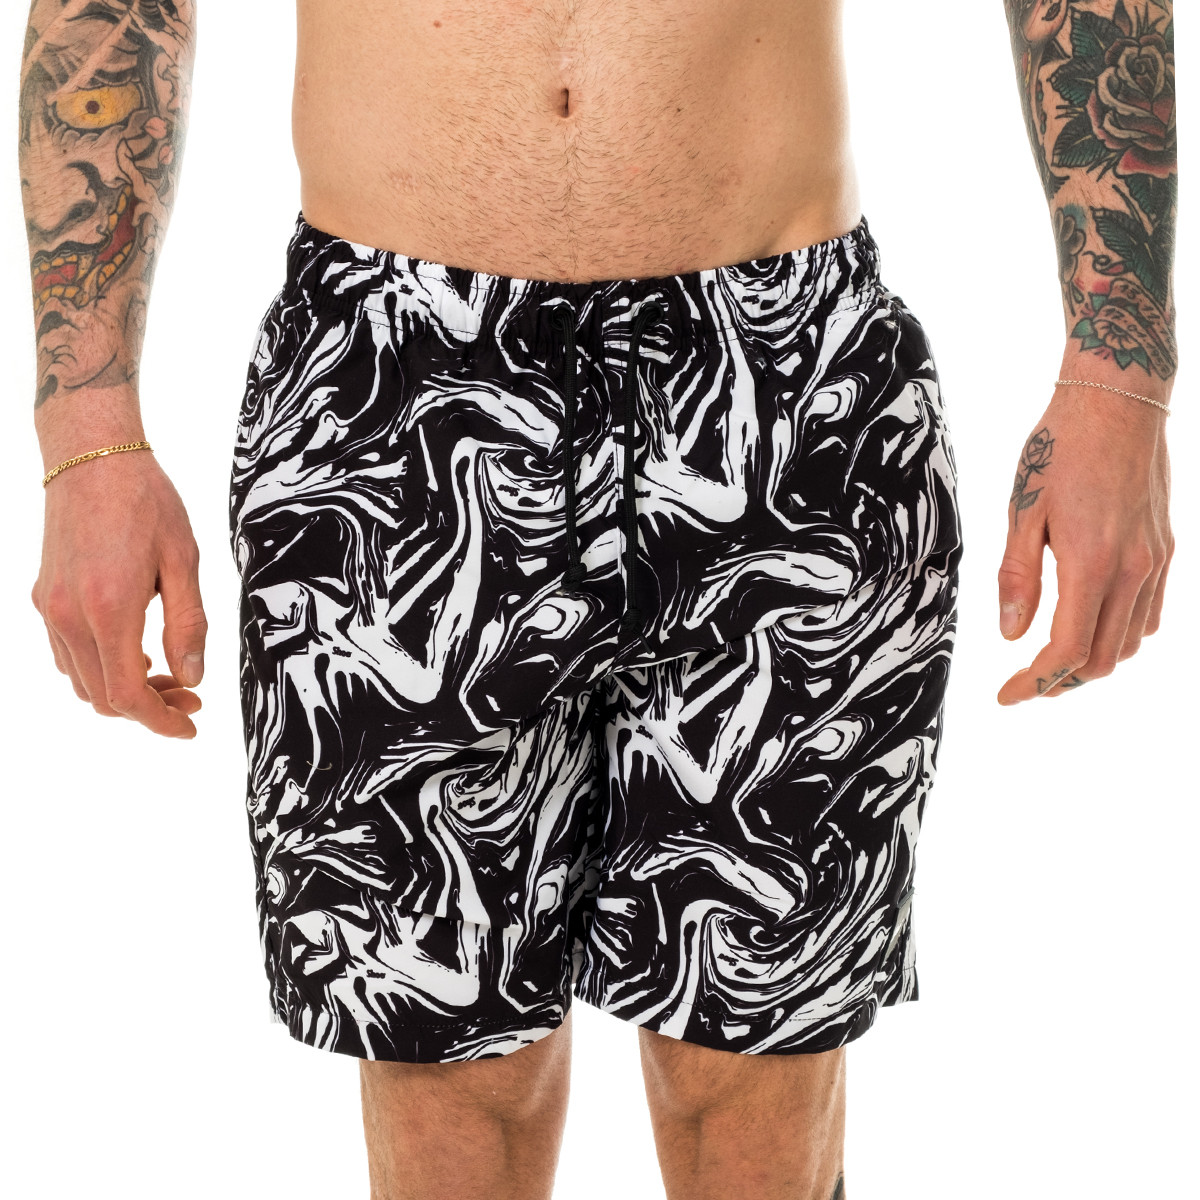 Shoe Swimsuit Man All Over Printed Beach Swim Shorts Dylanf71.Lqd